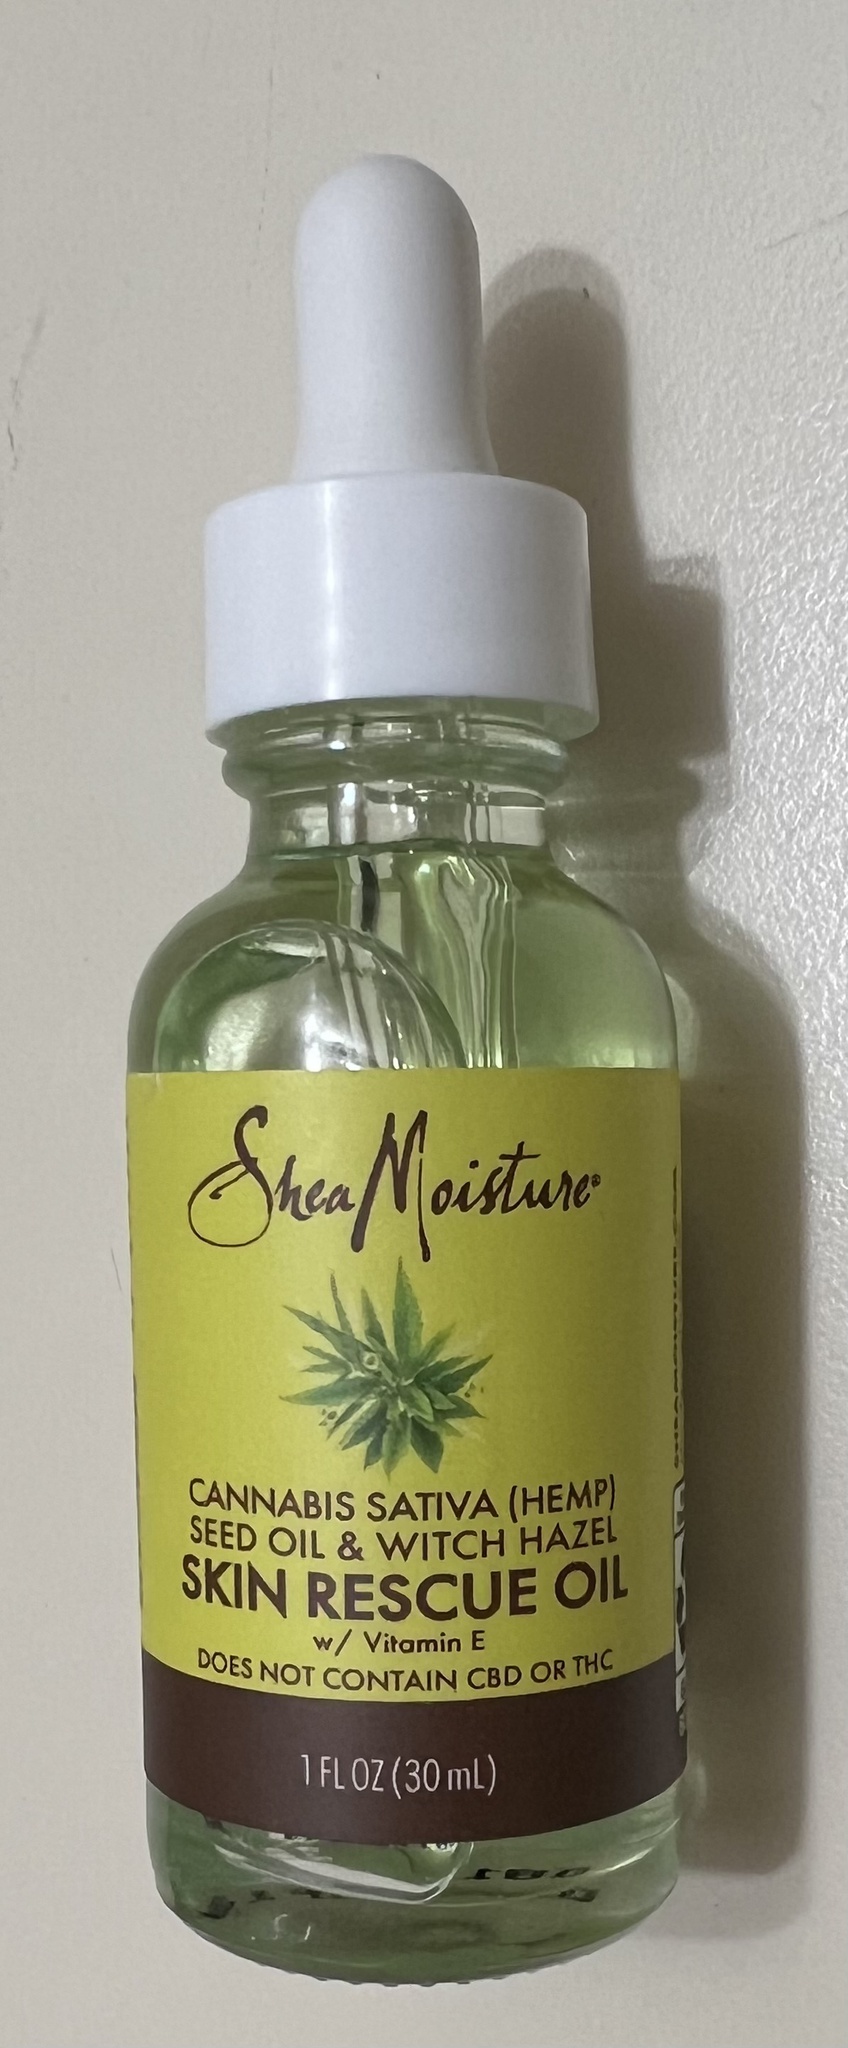 Shea Moisture Cannabis Sativa (hemp) Seed Oil & Witch Hazel Skin Rescue Oil W/ Vitamin E